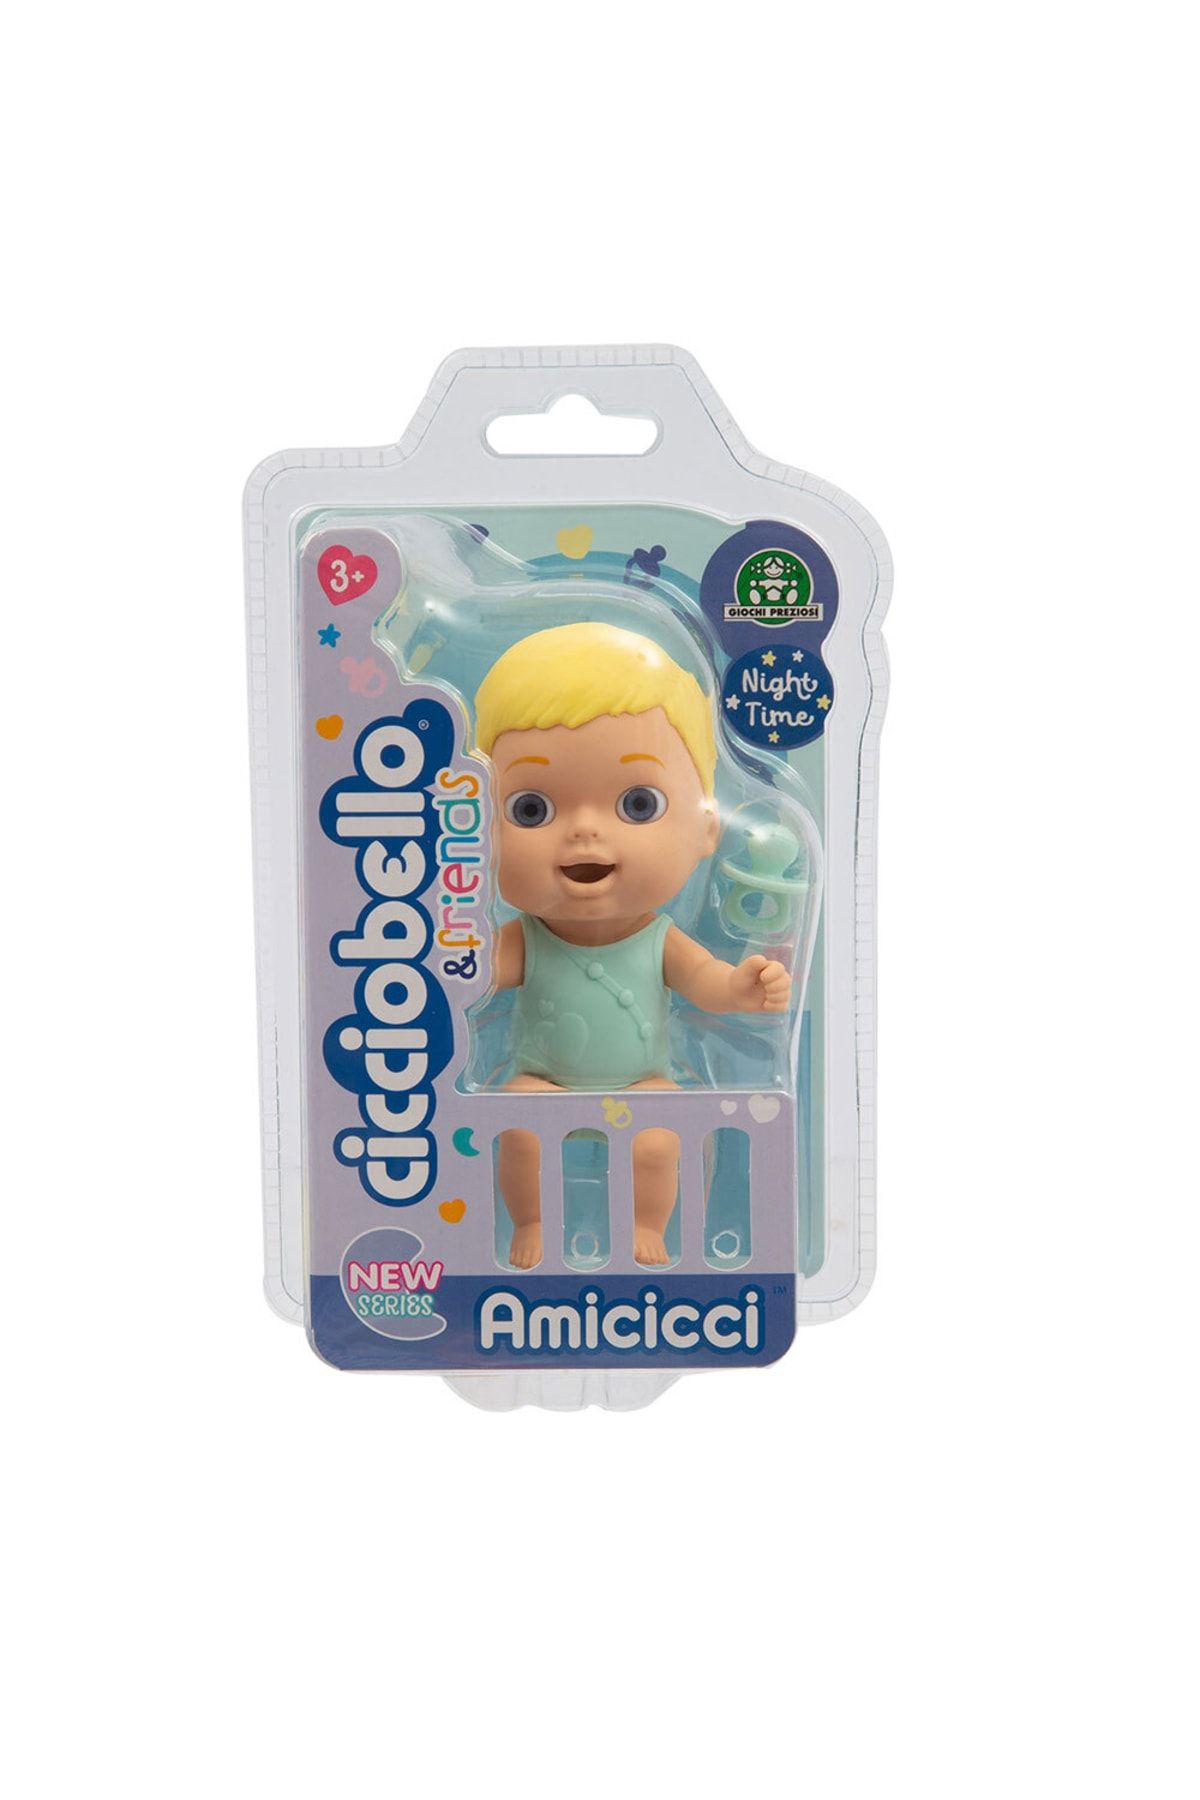 Cicciobello Amiccici Tekli Paket W5 Sarı Saçlı Cc032000-4